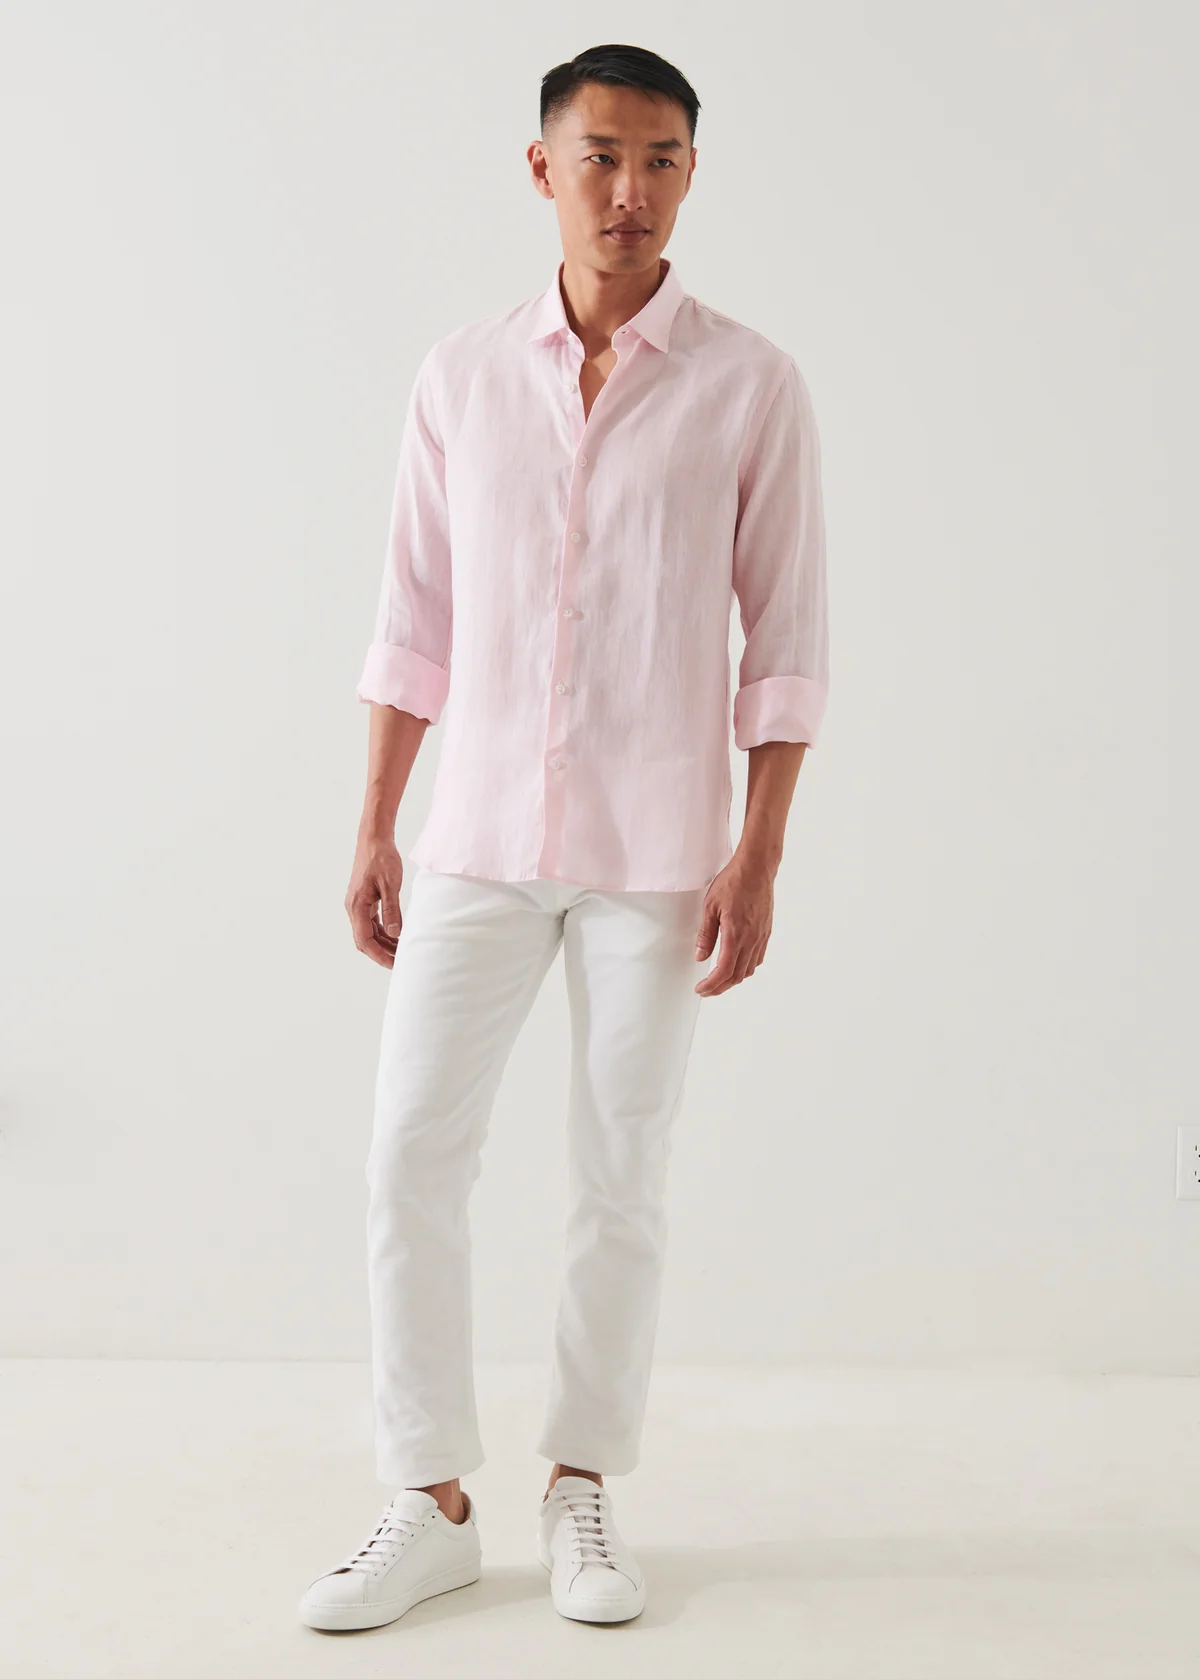 Long Sleeve Linen Chambray Shirt - Powder - Patrick Assaraf Canada - Danali